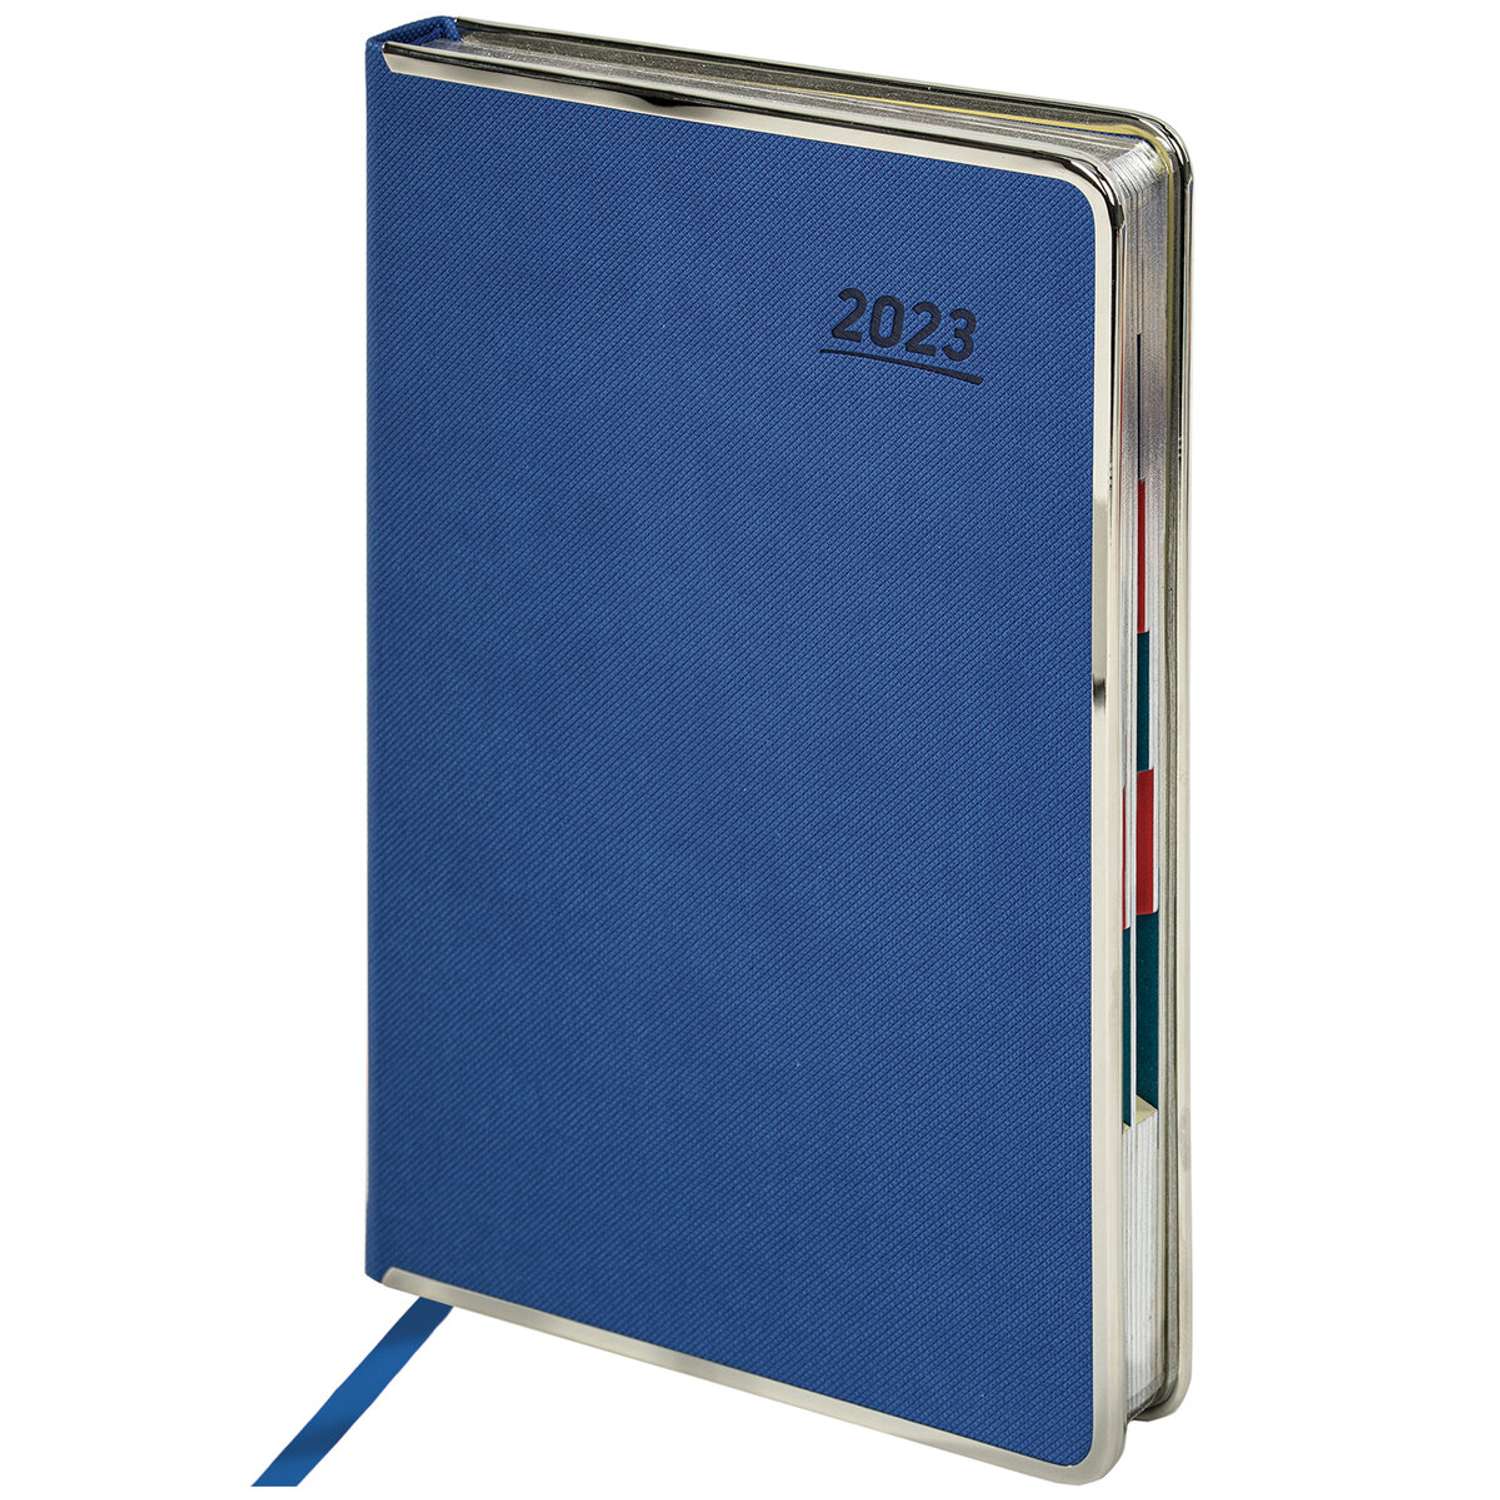 Ежедневник Galant датированный на 2023 год формата А5 148х218 мм - фото 1